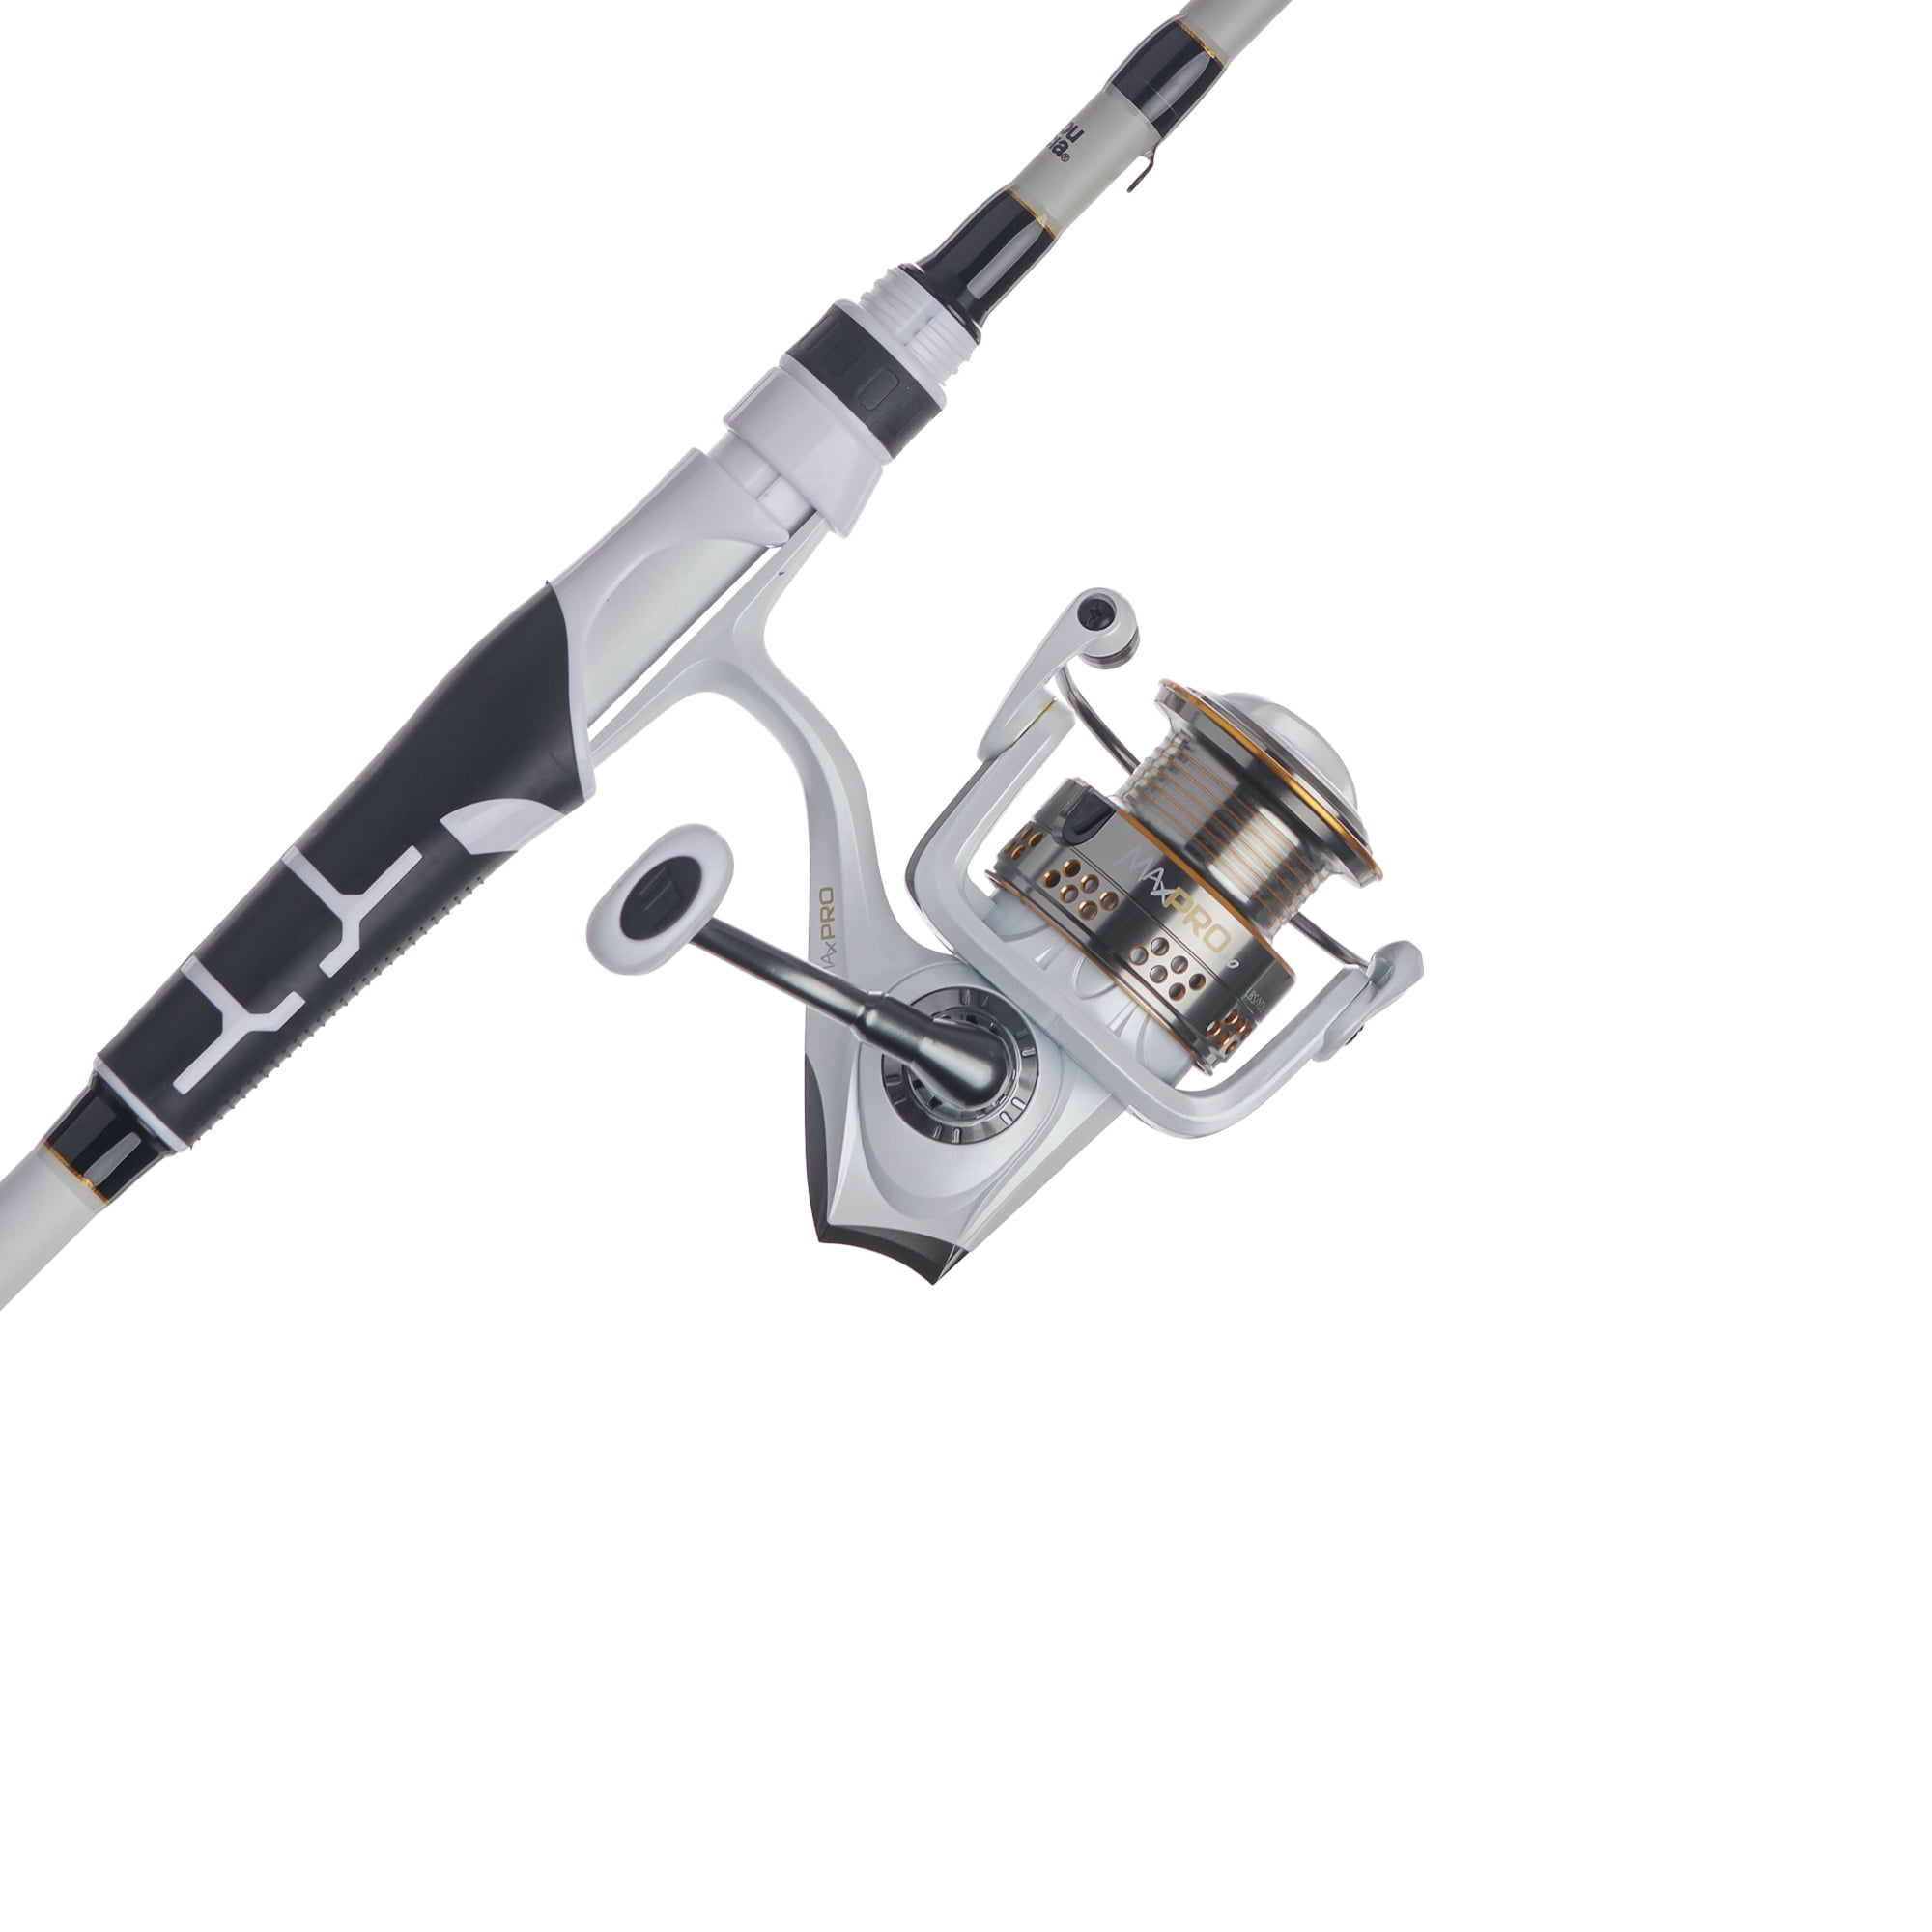 Abu Garcia 7' Max Pro Fishing Rod and Reel Spinning Combo